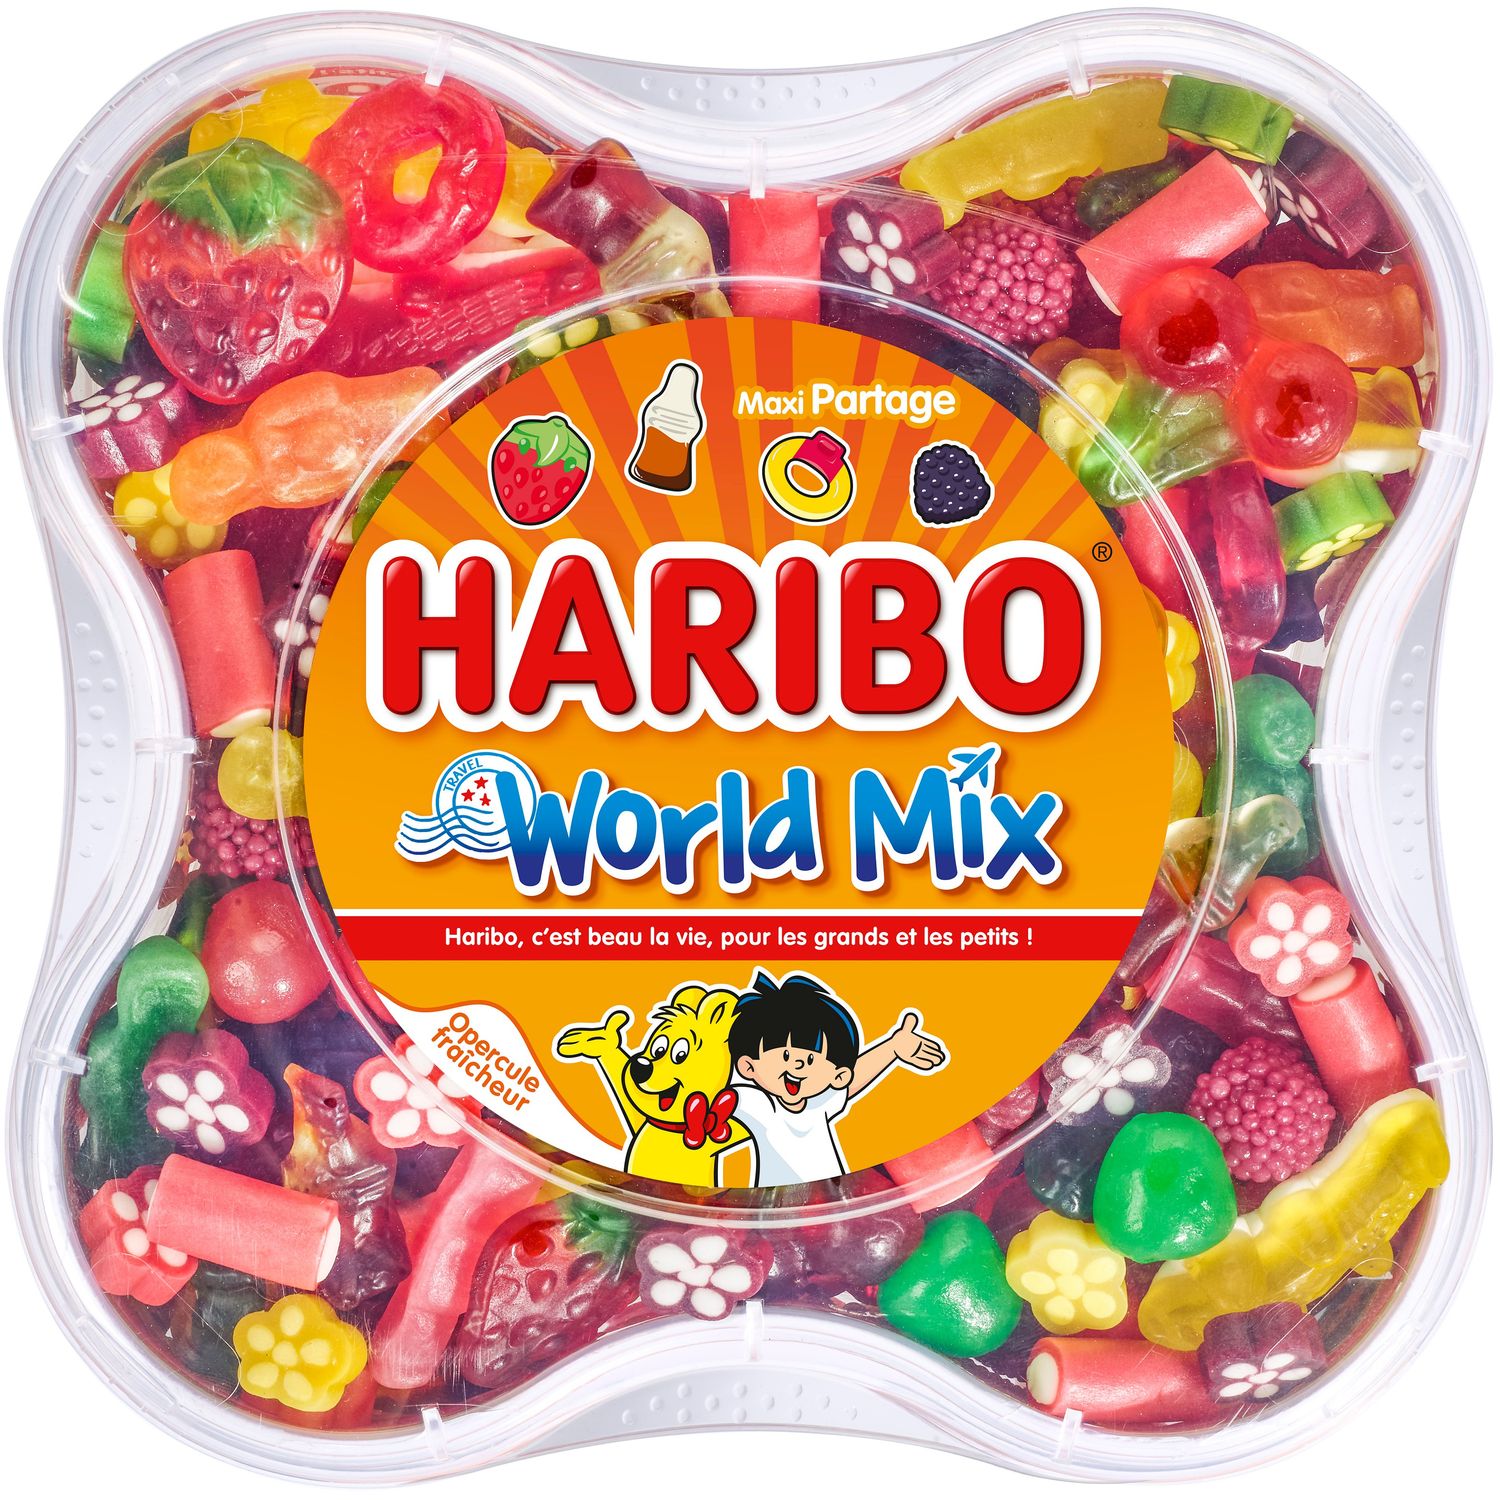 HARIBO World mix assortiment de bonbons boite 750g pas cher